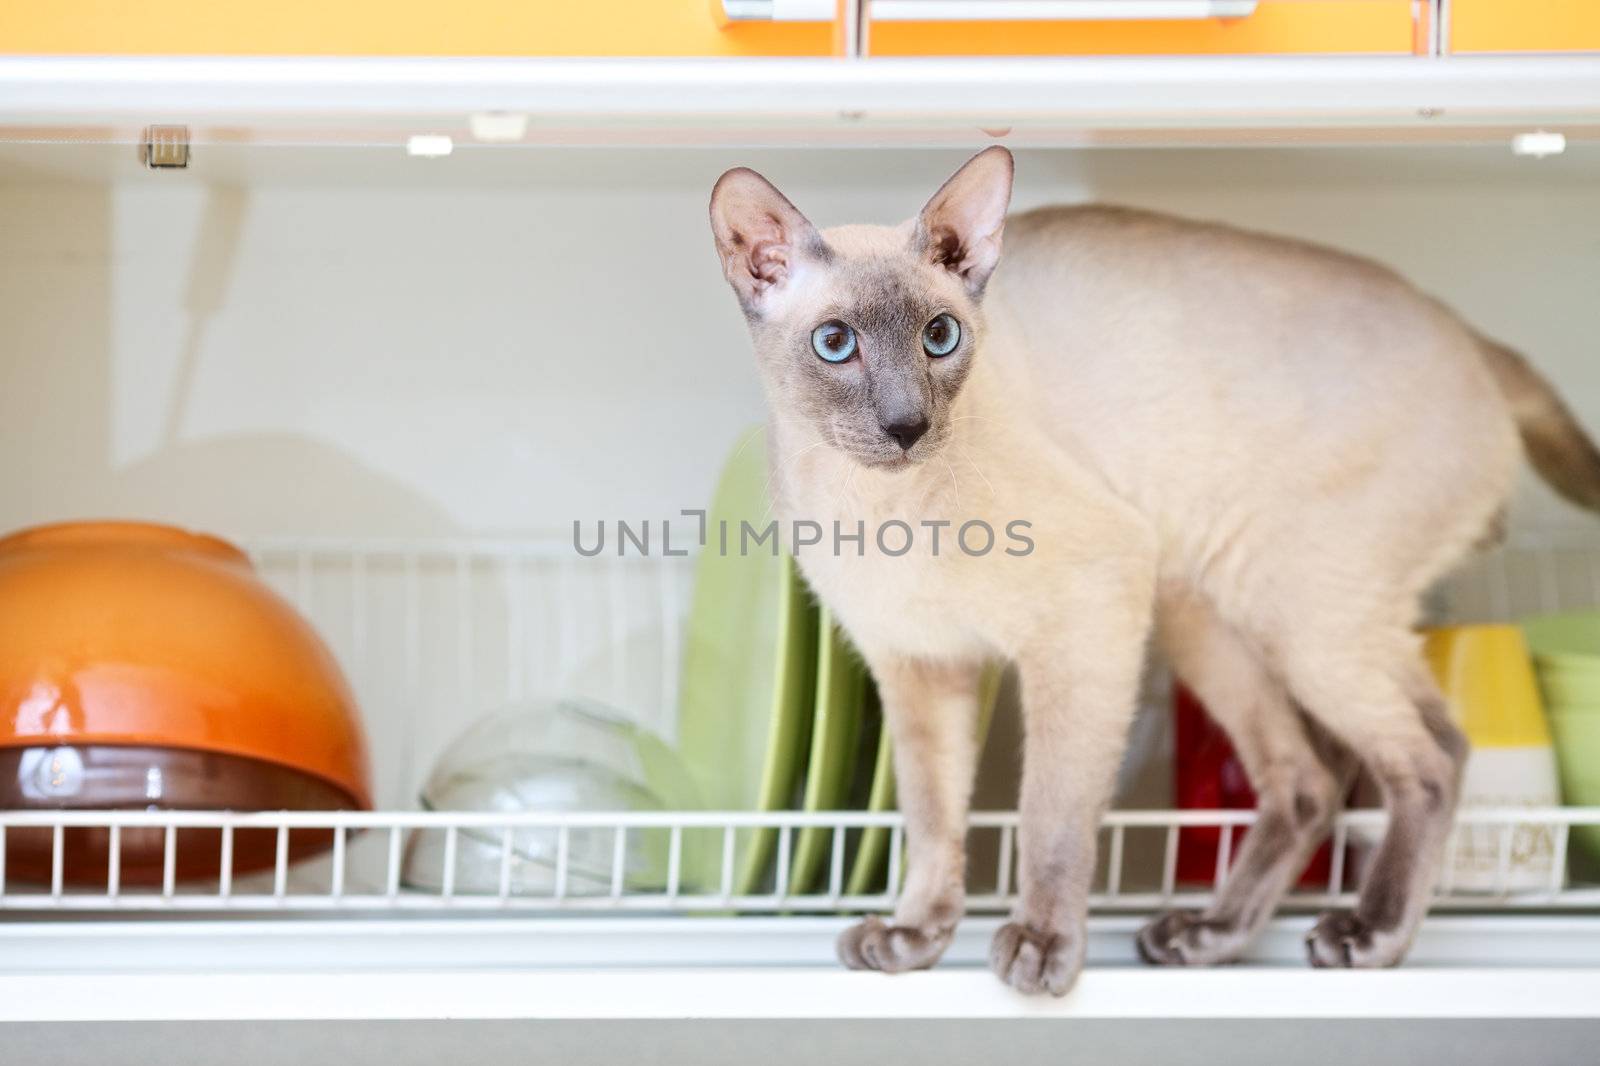 hairless oriental cat, peterbald, on dish drainer shelf